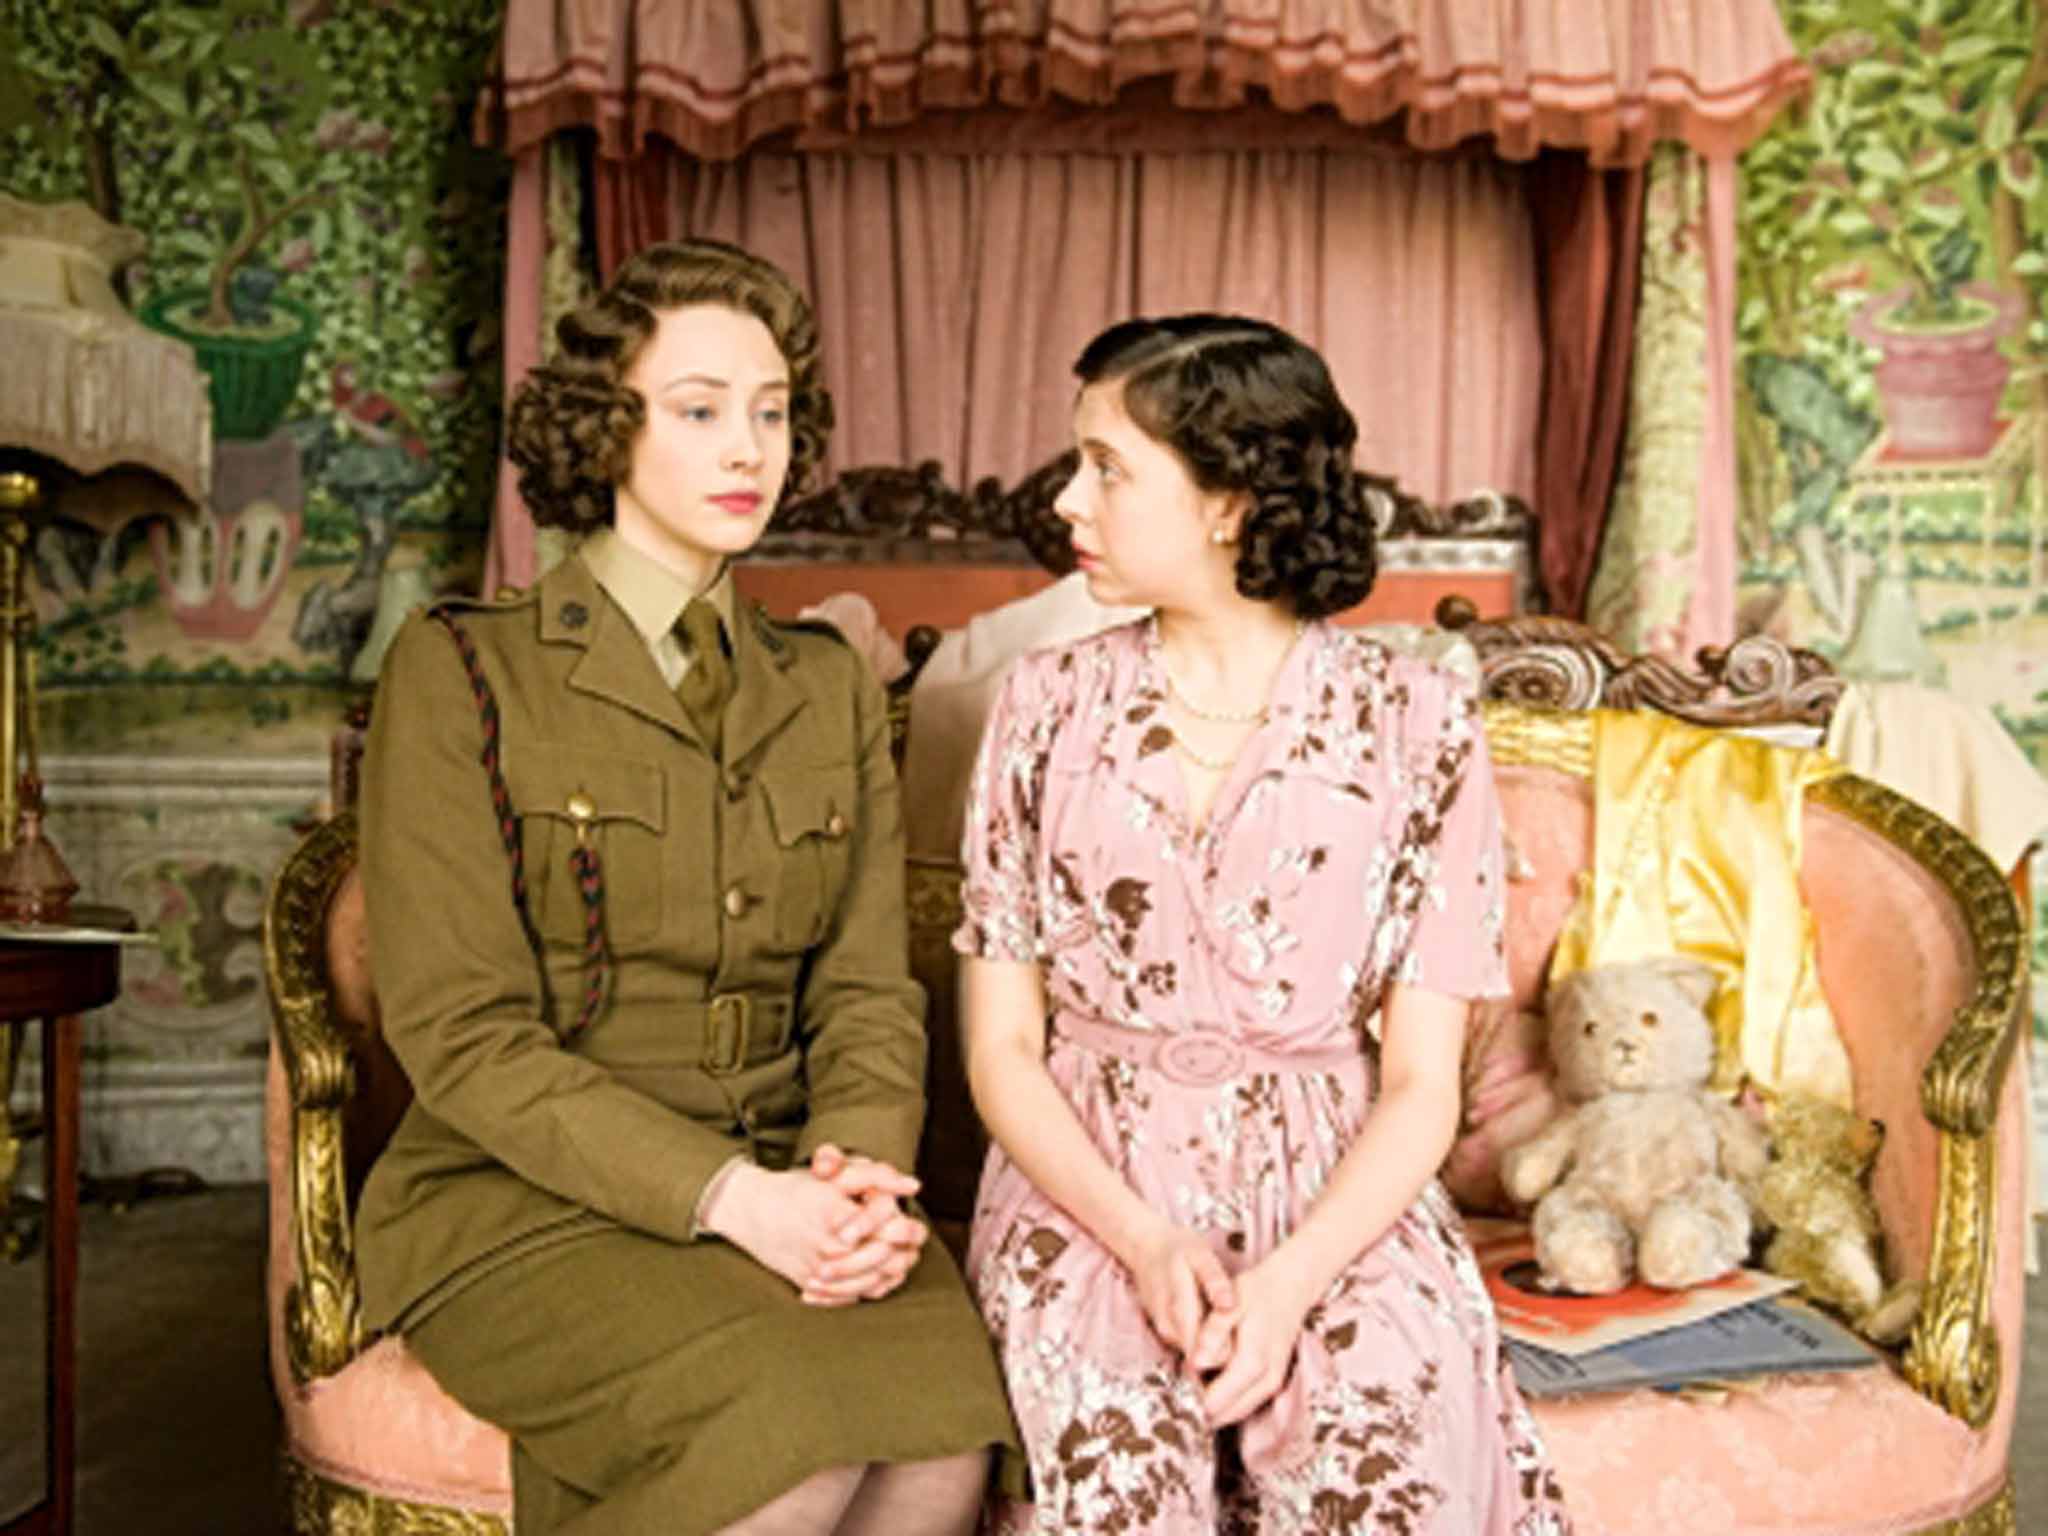 Sisterly love: Sarah Gadon (left) as Princess Elizabeth with Bel Powley's Princess Margaret